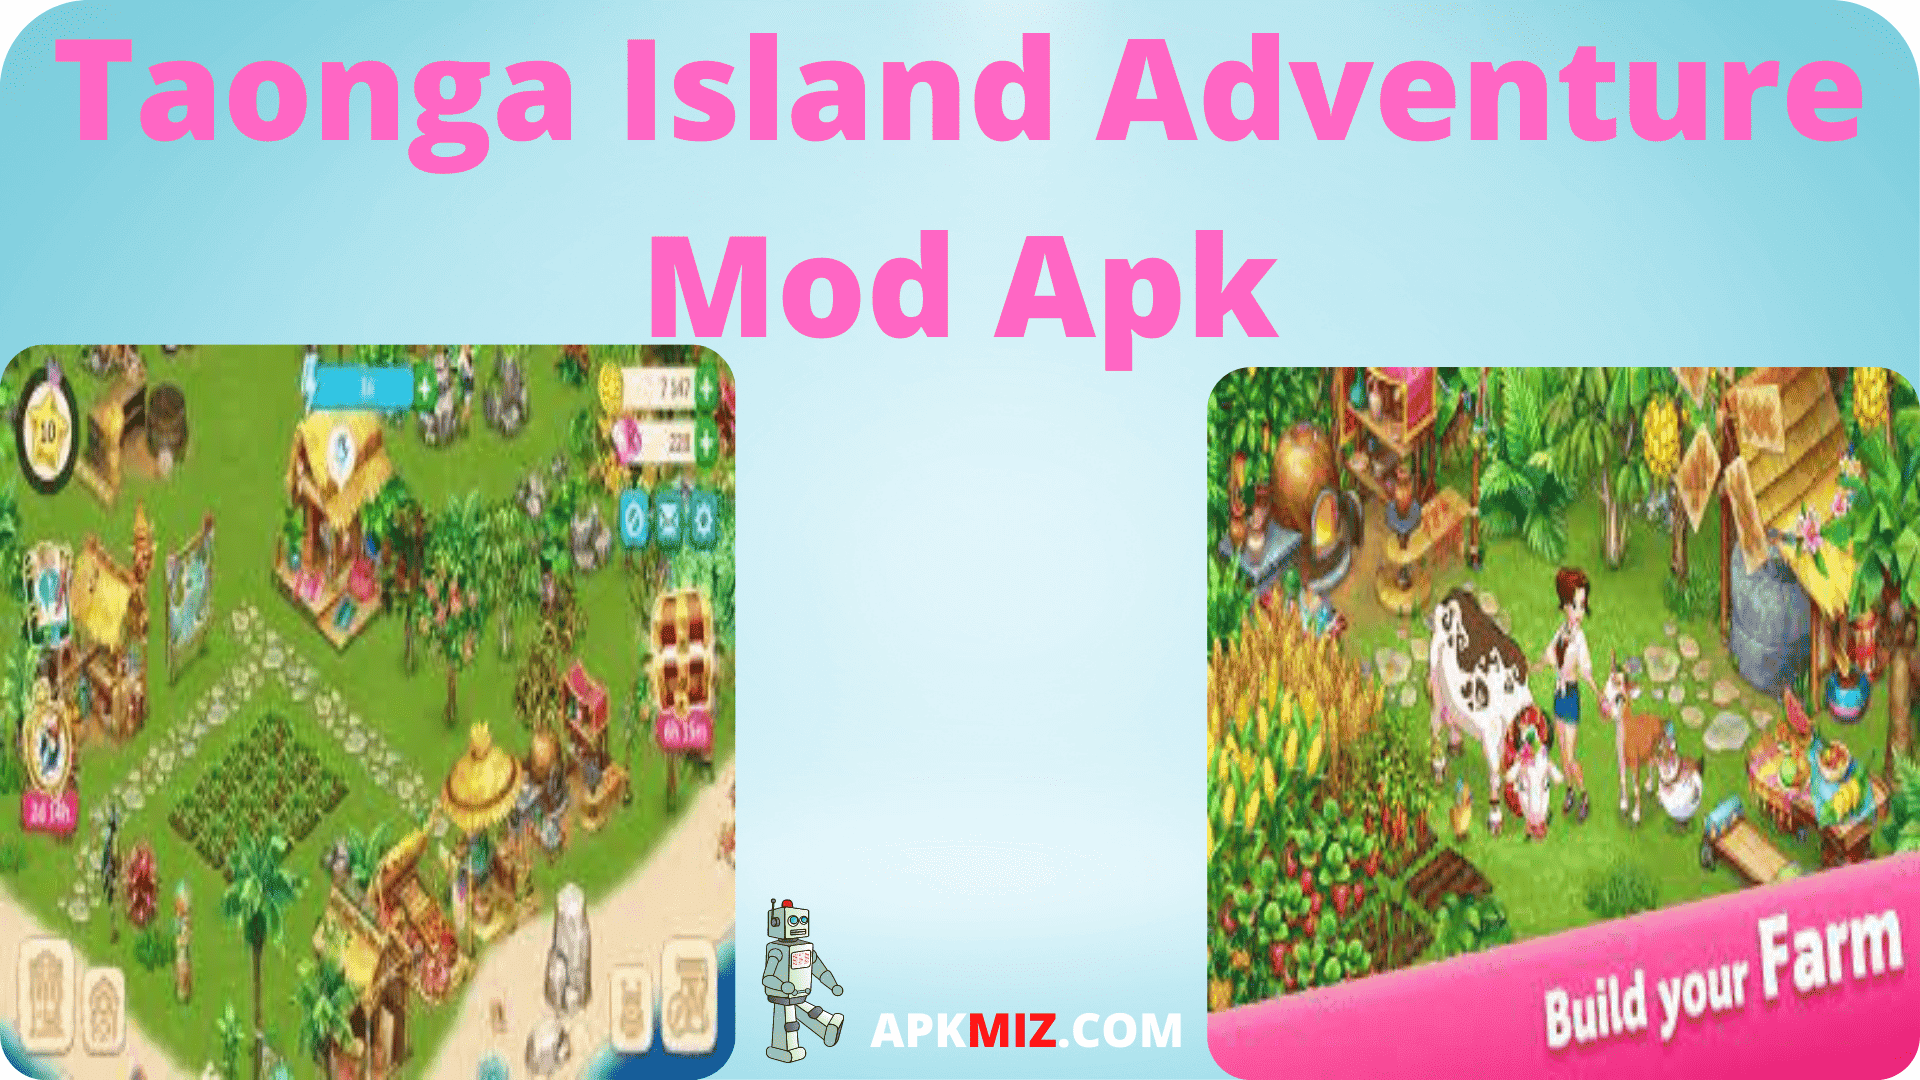 Taonga Island Adventure Mod Apk